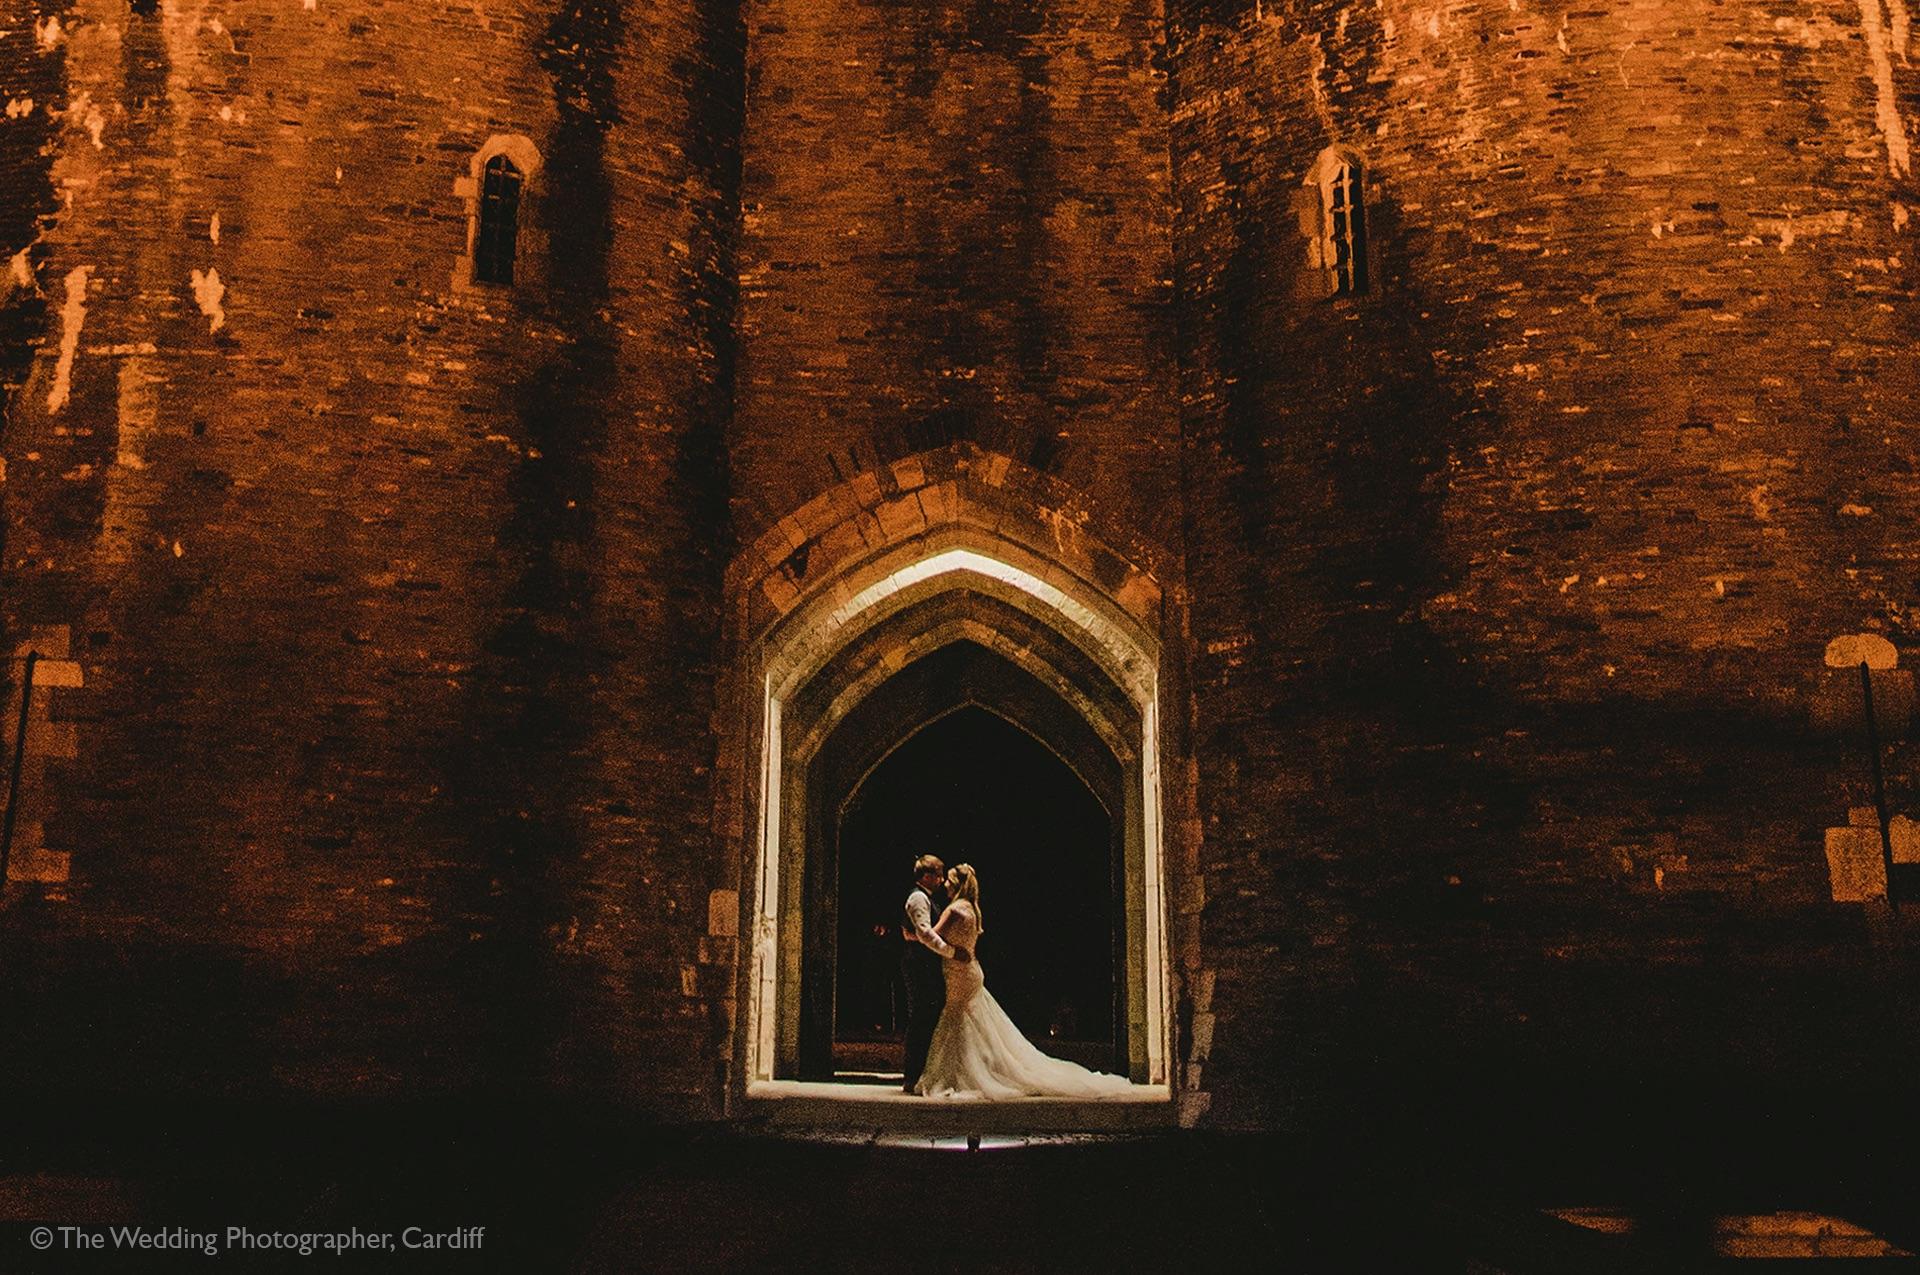 Priodas yng Nghastell Caerffili/Wedding at Caerphilly Castle